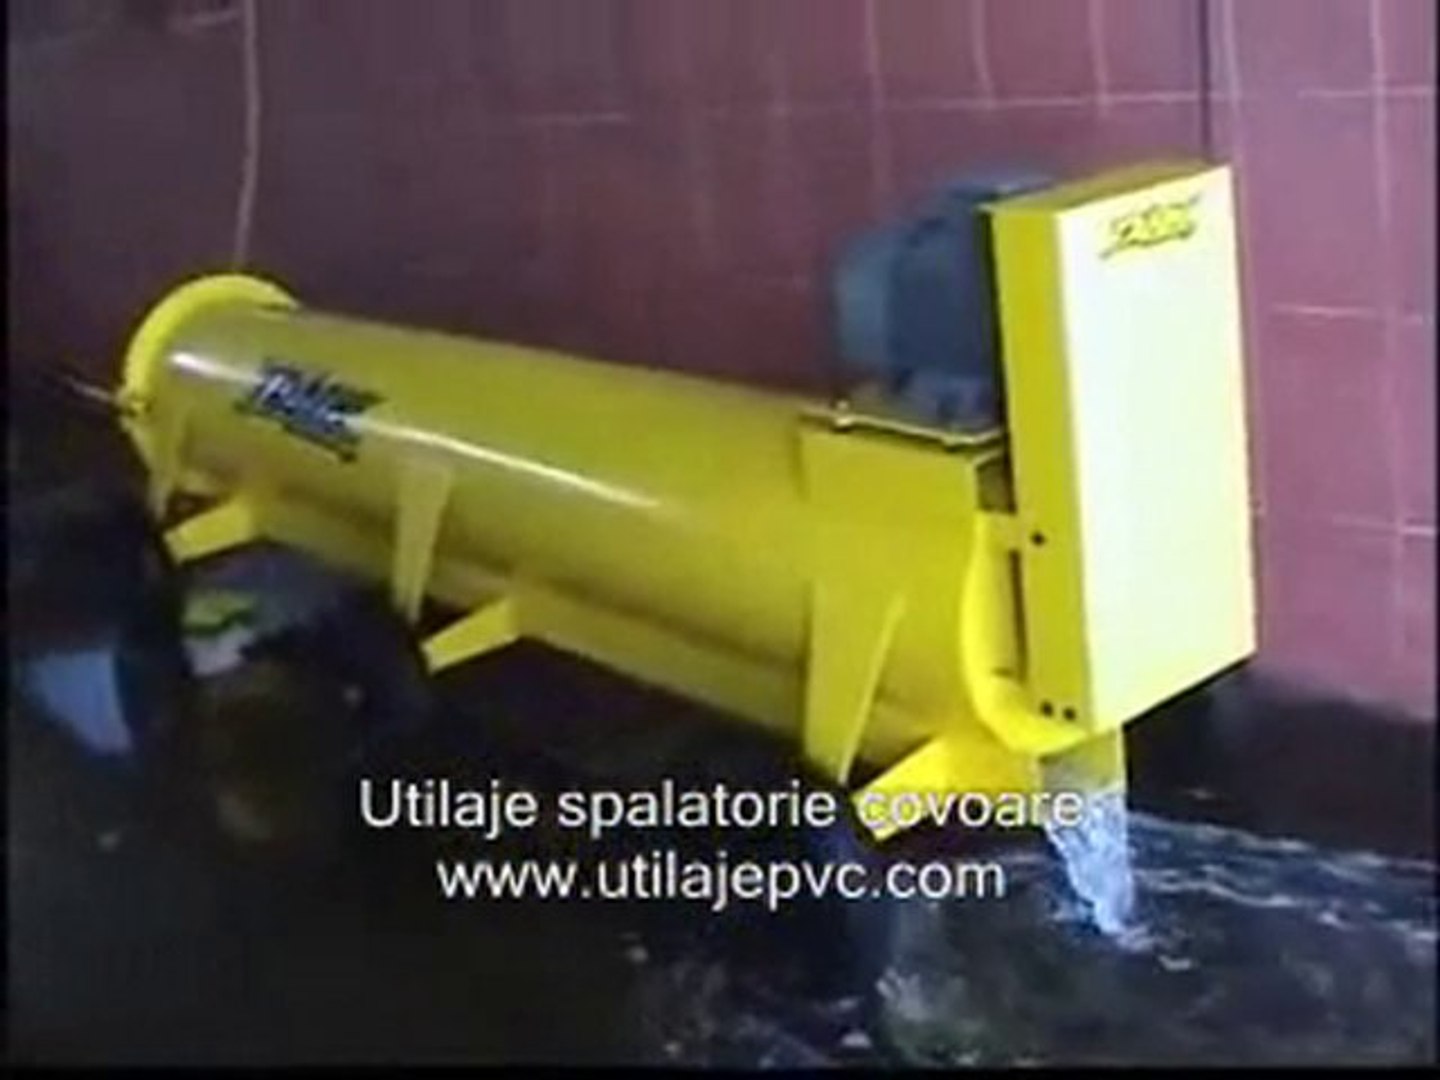 Utilaje spalatorie covoare echipamente spalatorie mocheta - video  Dailymotion